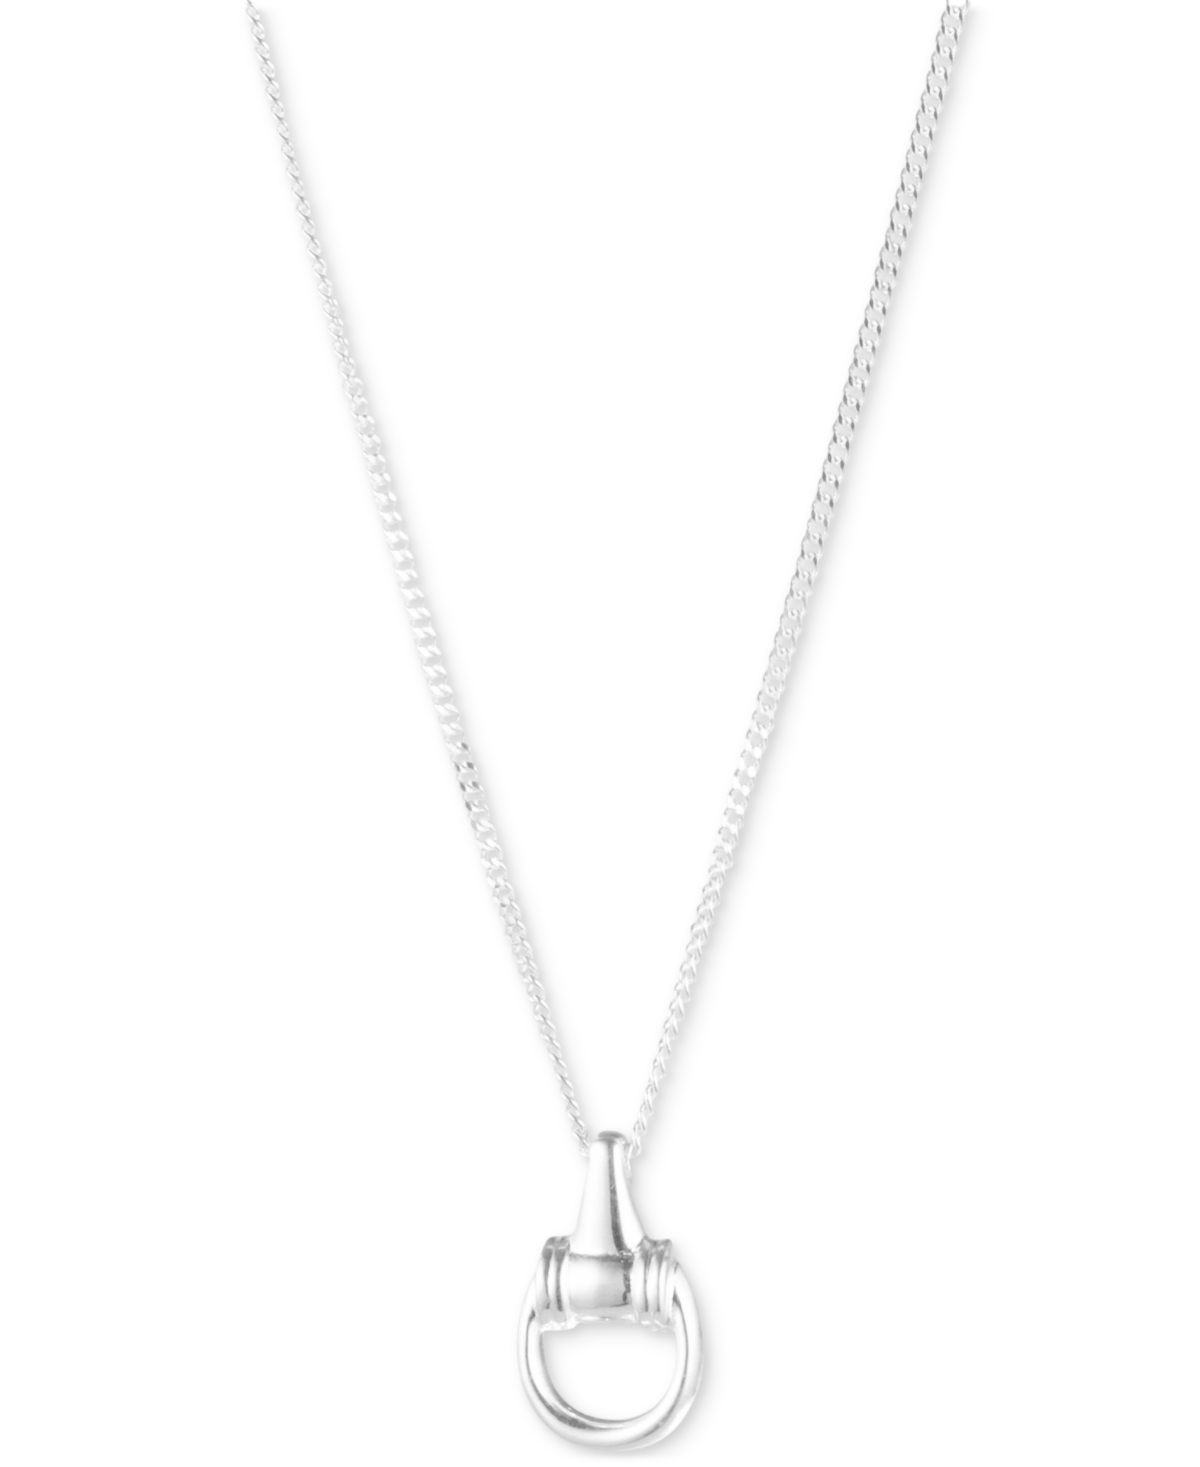 Lauren Ralph Lauren Horsebit Pendant Necklace in Sterling Silver, 15" + 3" extender - Sterling Silver